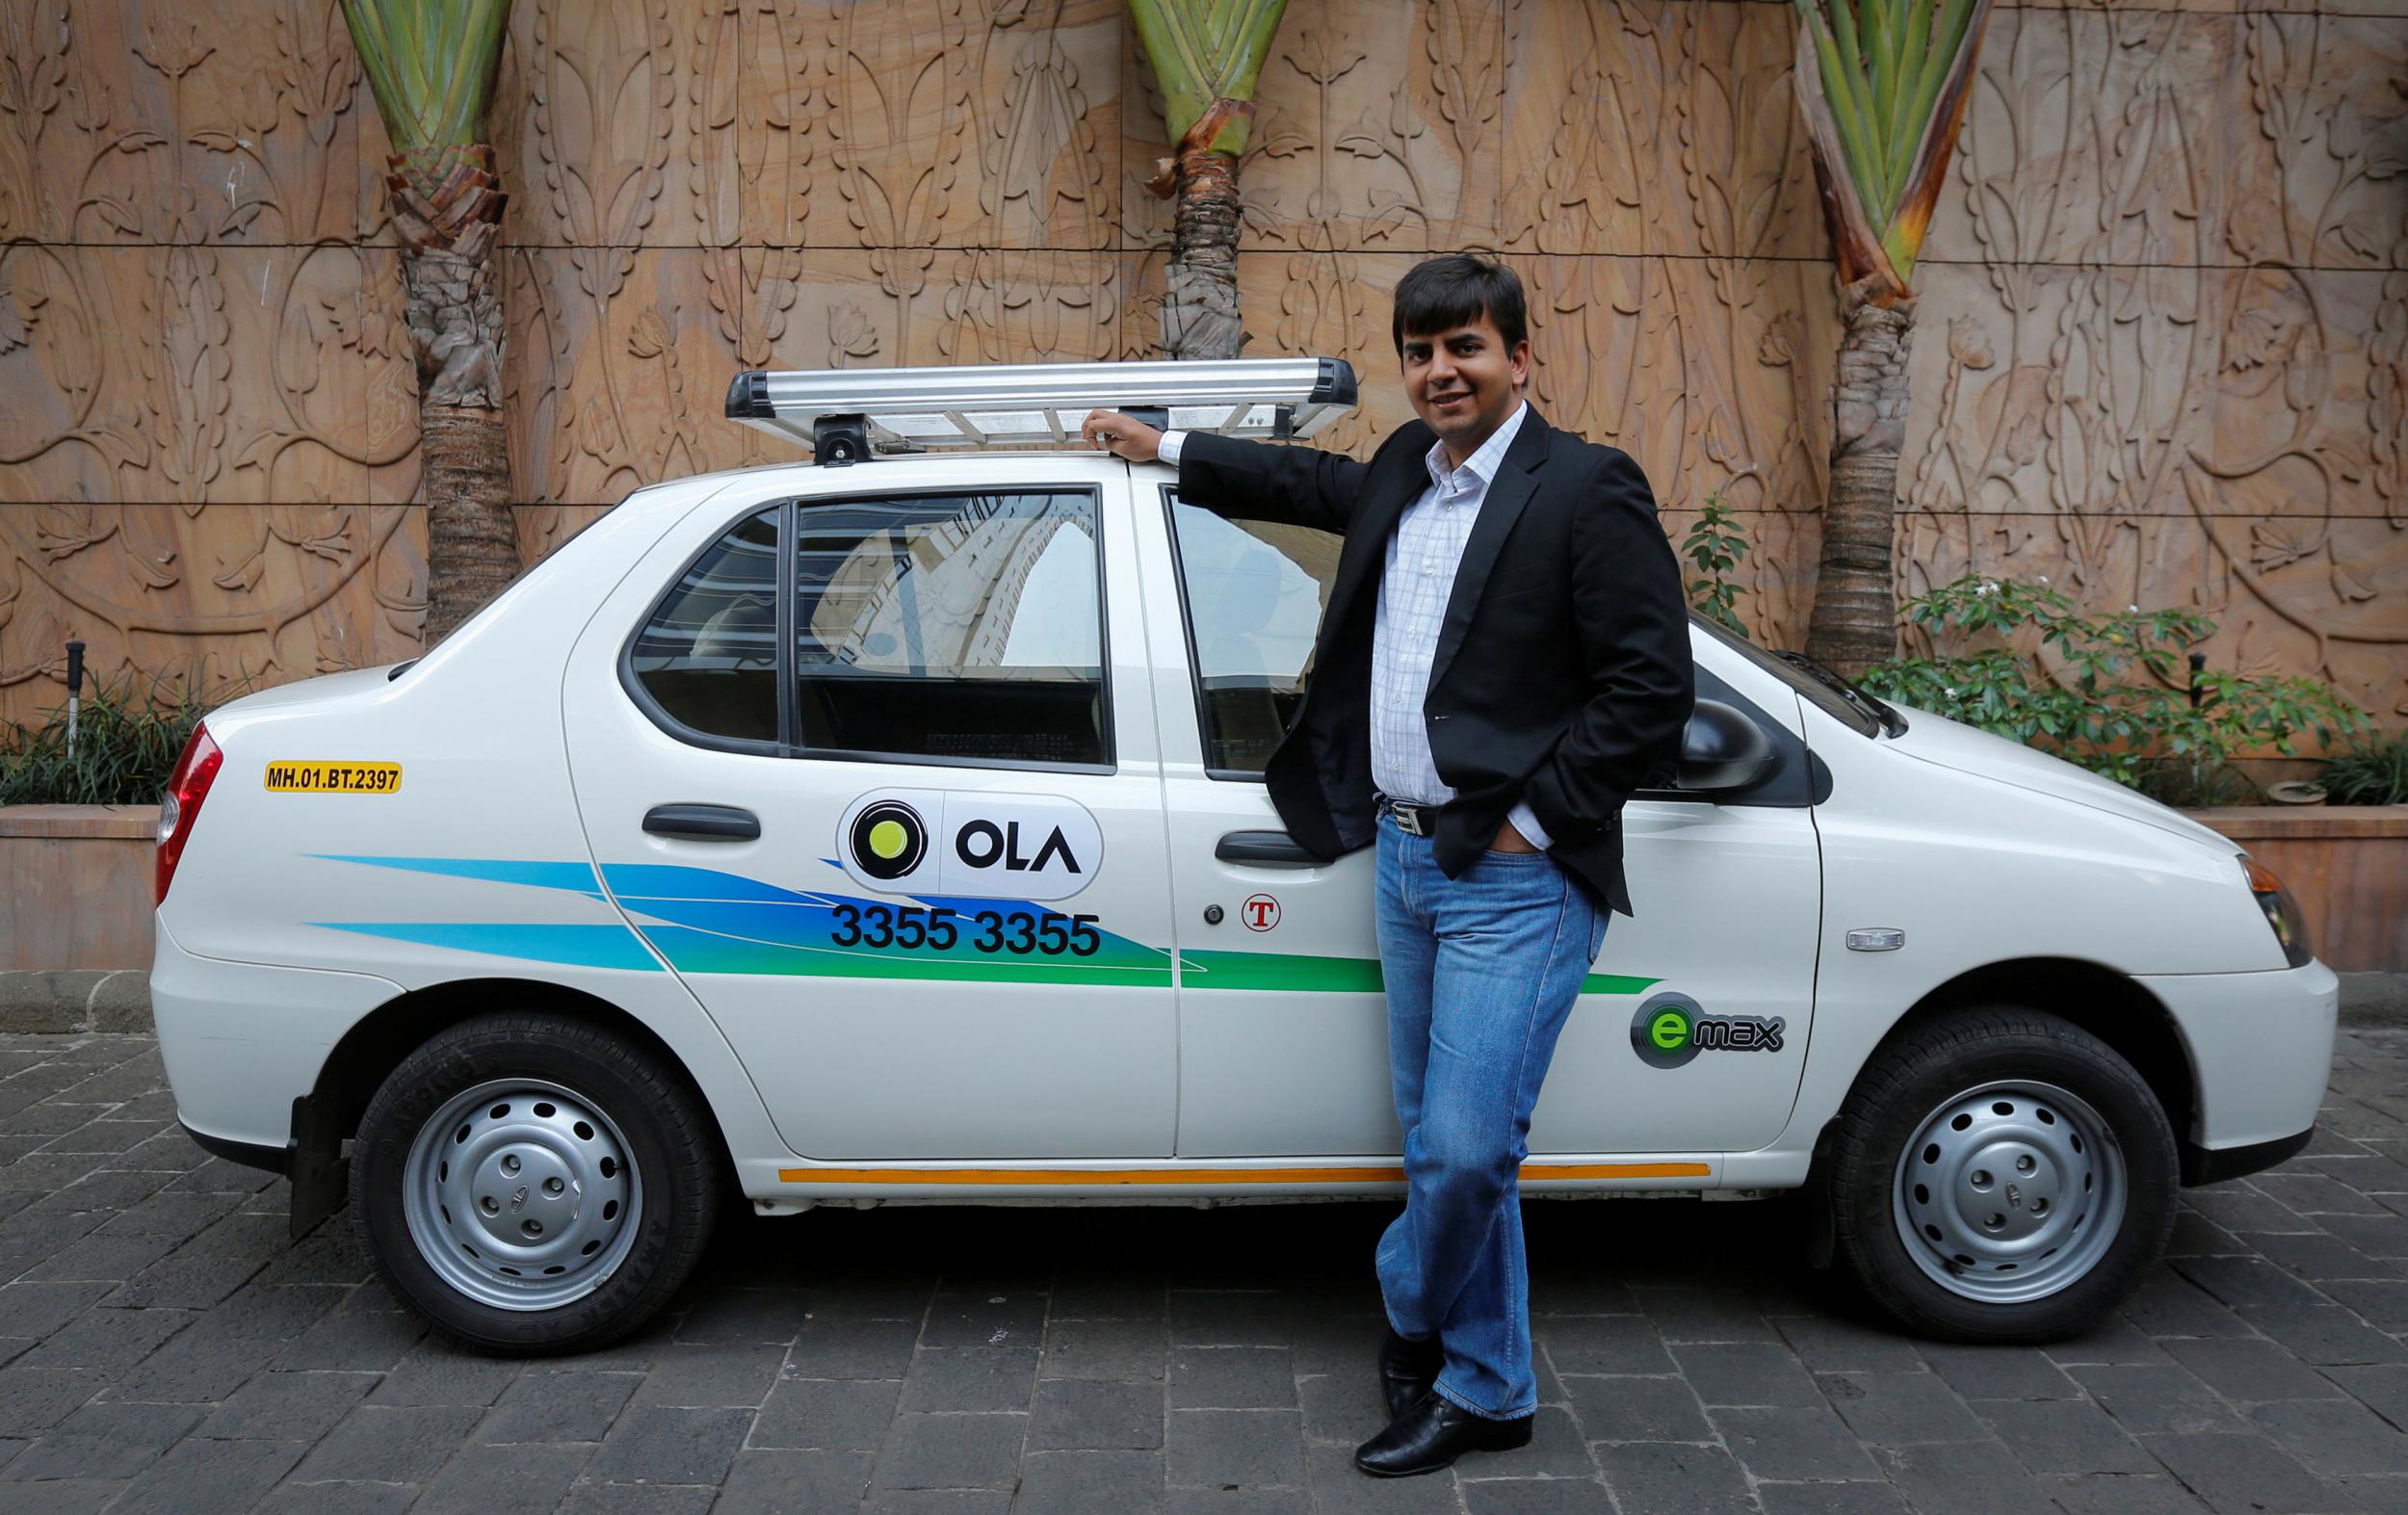 Ola co-founder and chief executive Bhavish Aggarwal dominates the Indian ride-hailing market